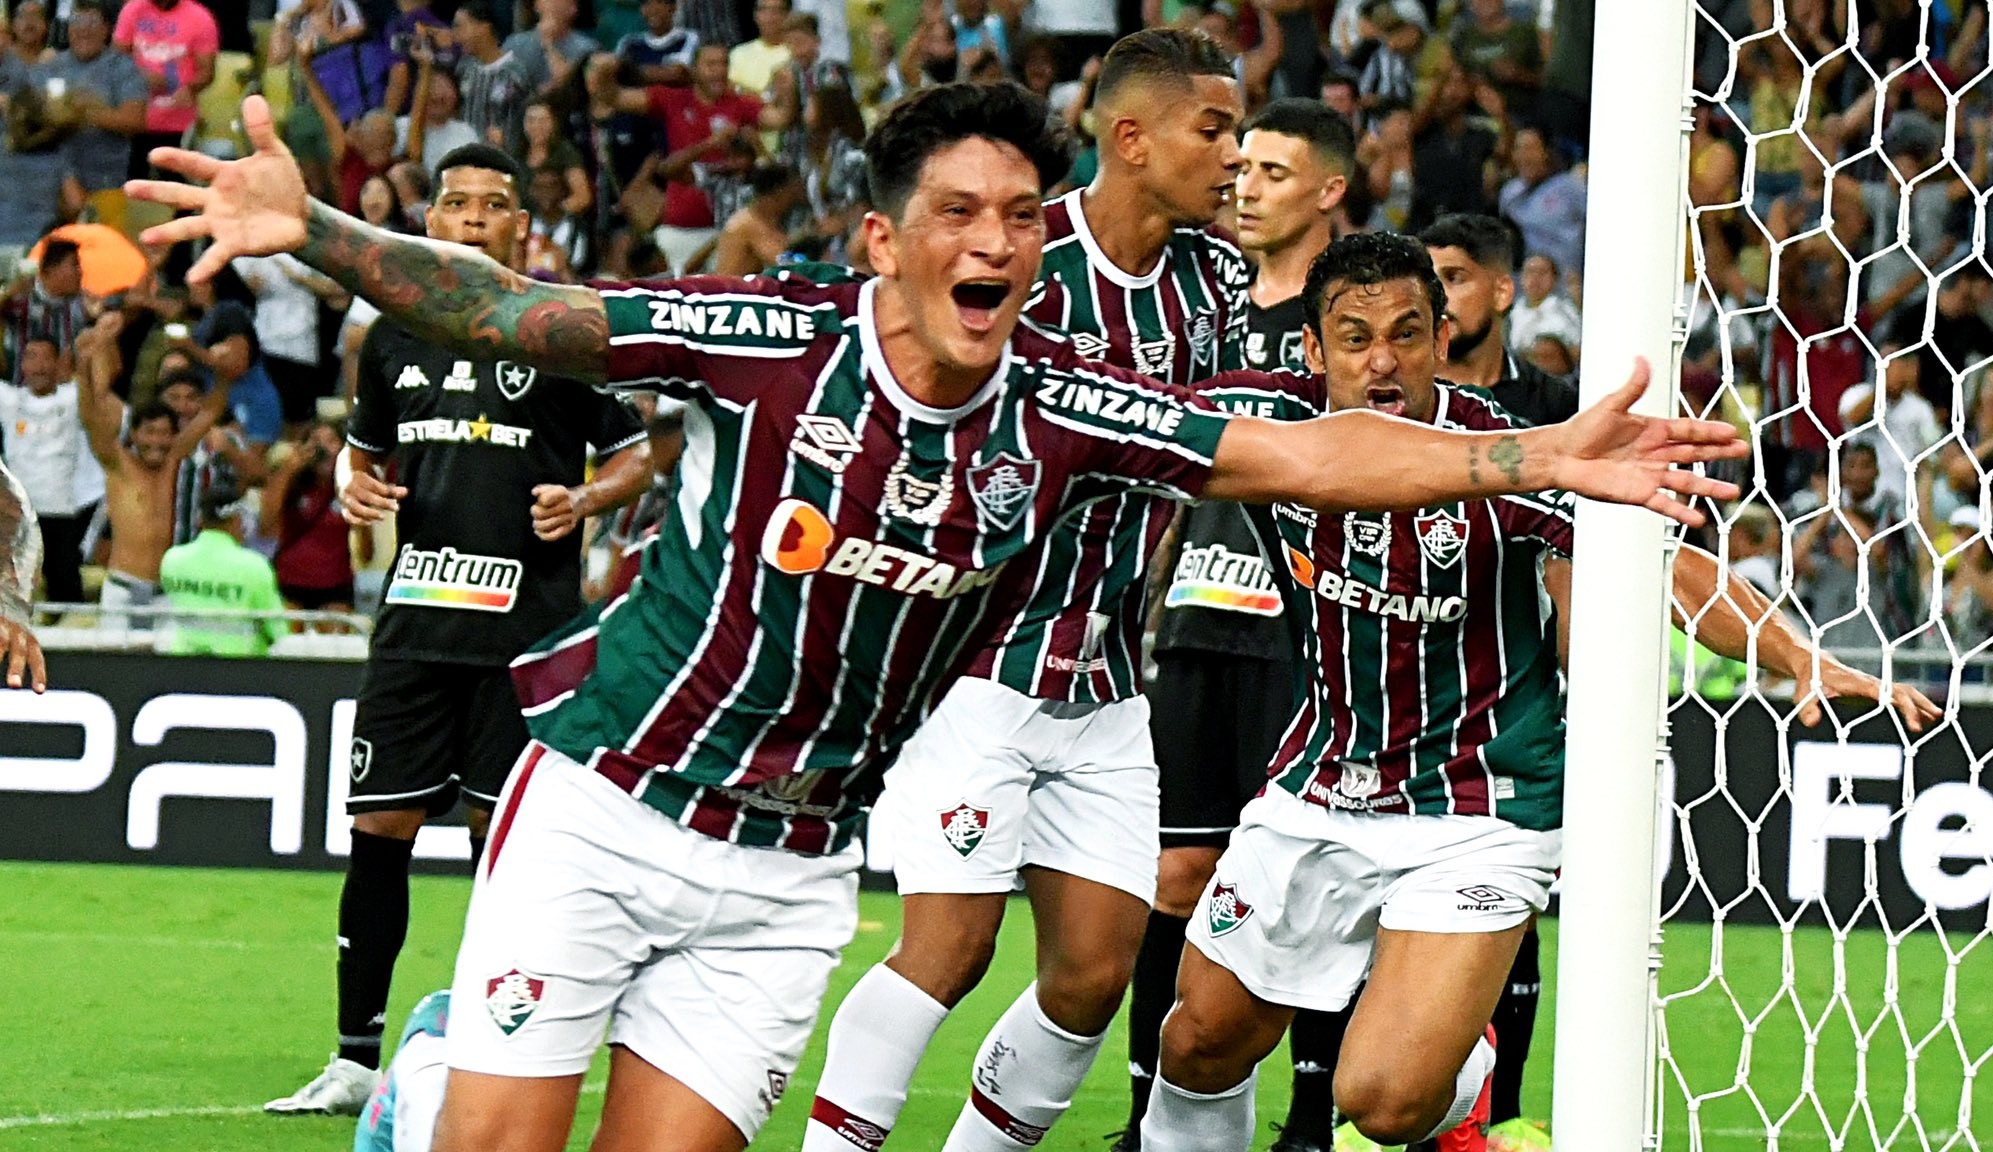 Cano marca no fim, e classifica Fluminense para a final do Carioca